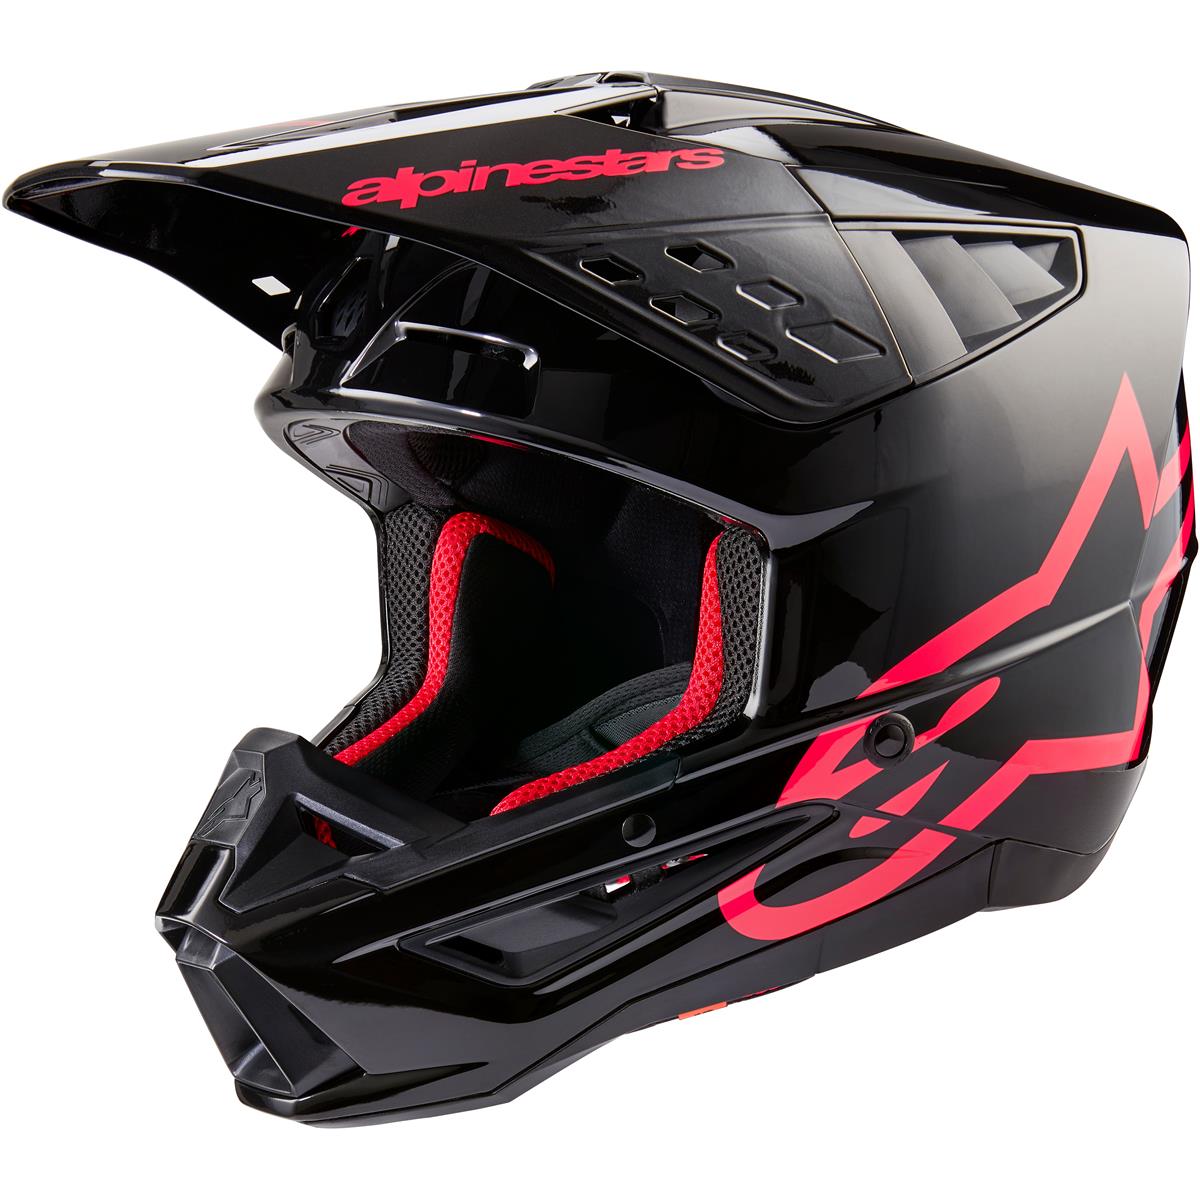 Alpinestars MX Helmet S-M5 Corp - Black/Diva Pink/Glossy